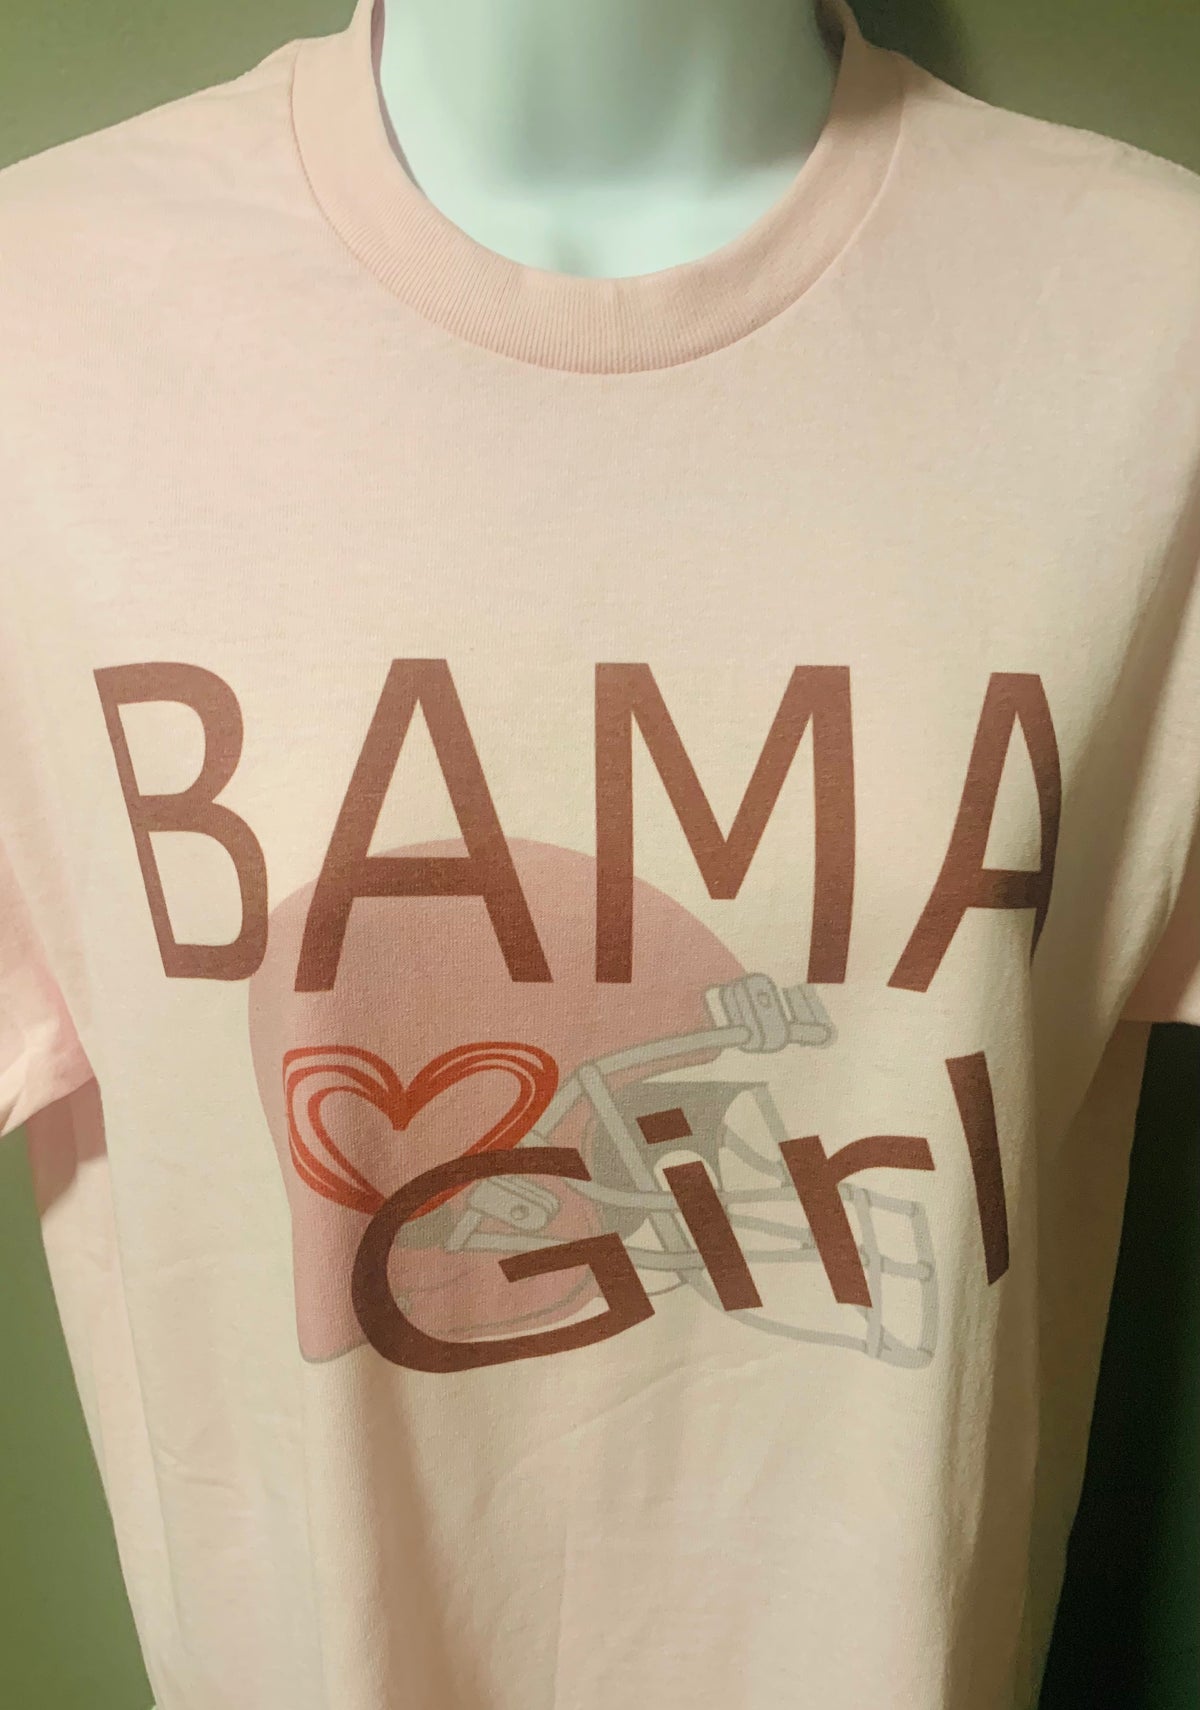 Bama Girl Graphic Top